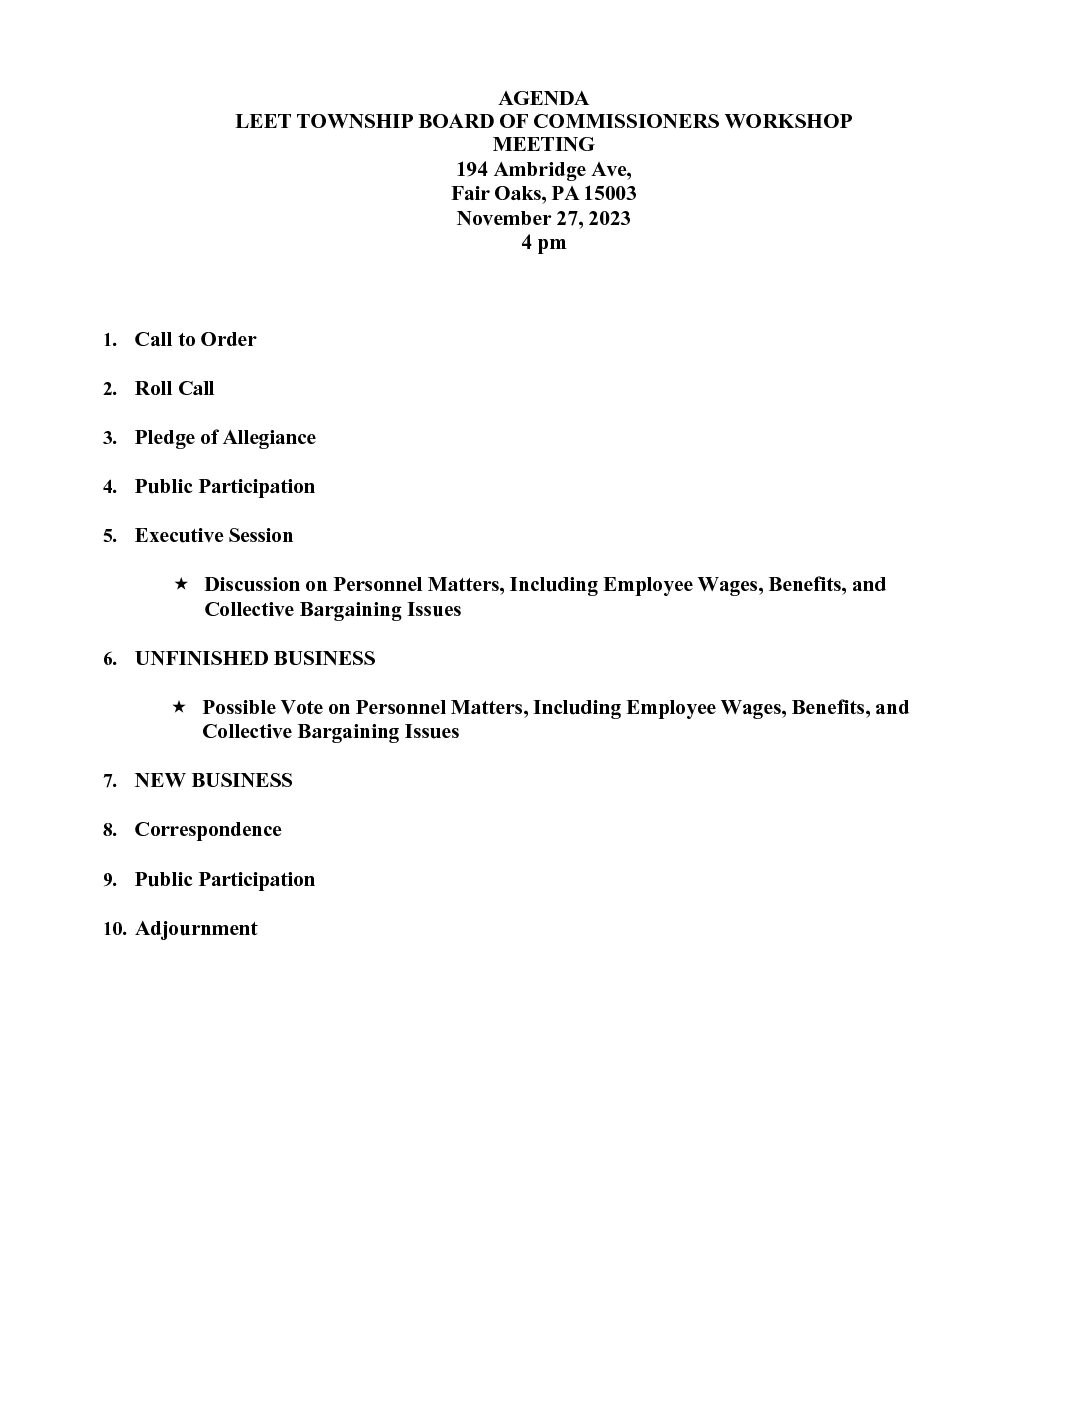 AGENDA November 27, 2023, Workshop Meeting Board of Commissioners (1)